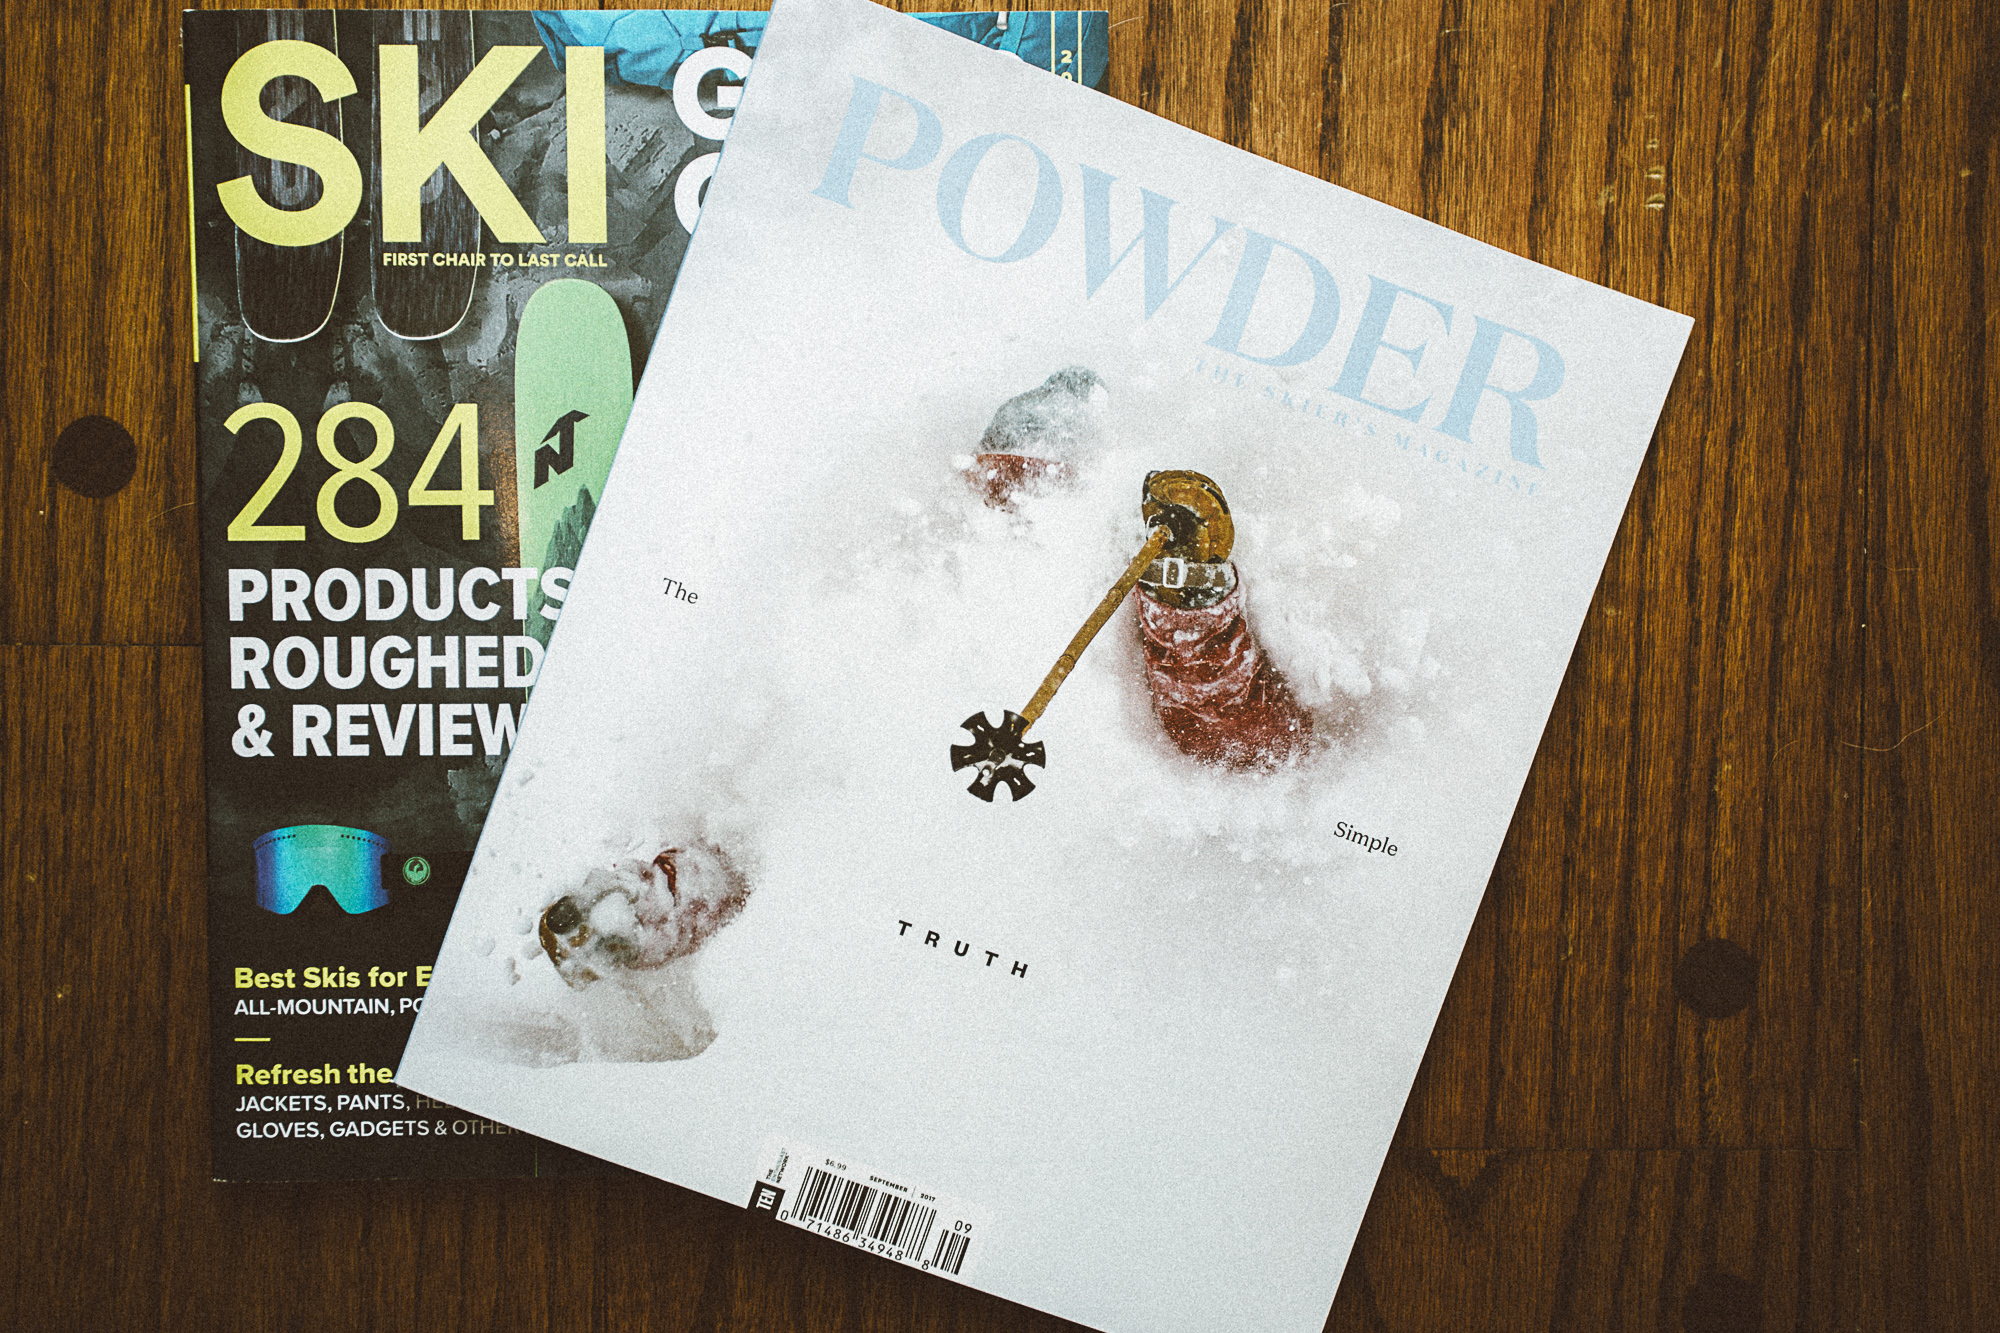 The 2018 Powder and Ski Magazine Ski Buyer's Guide